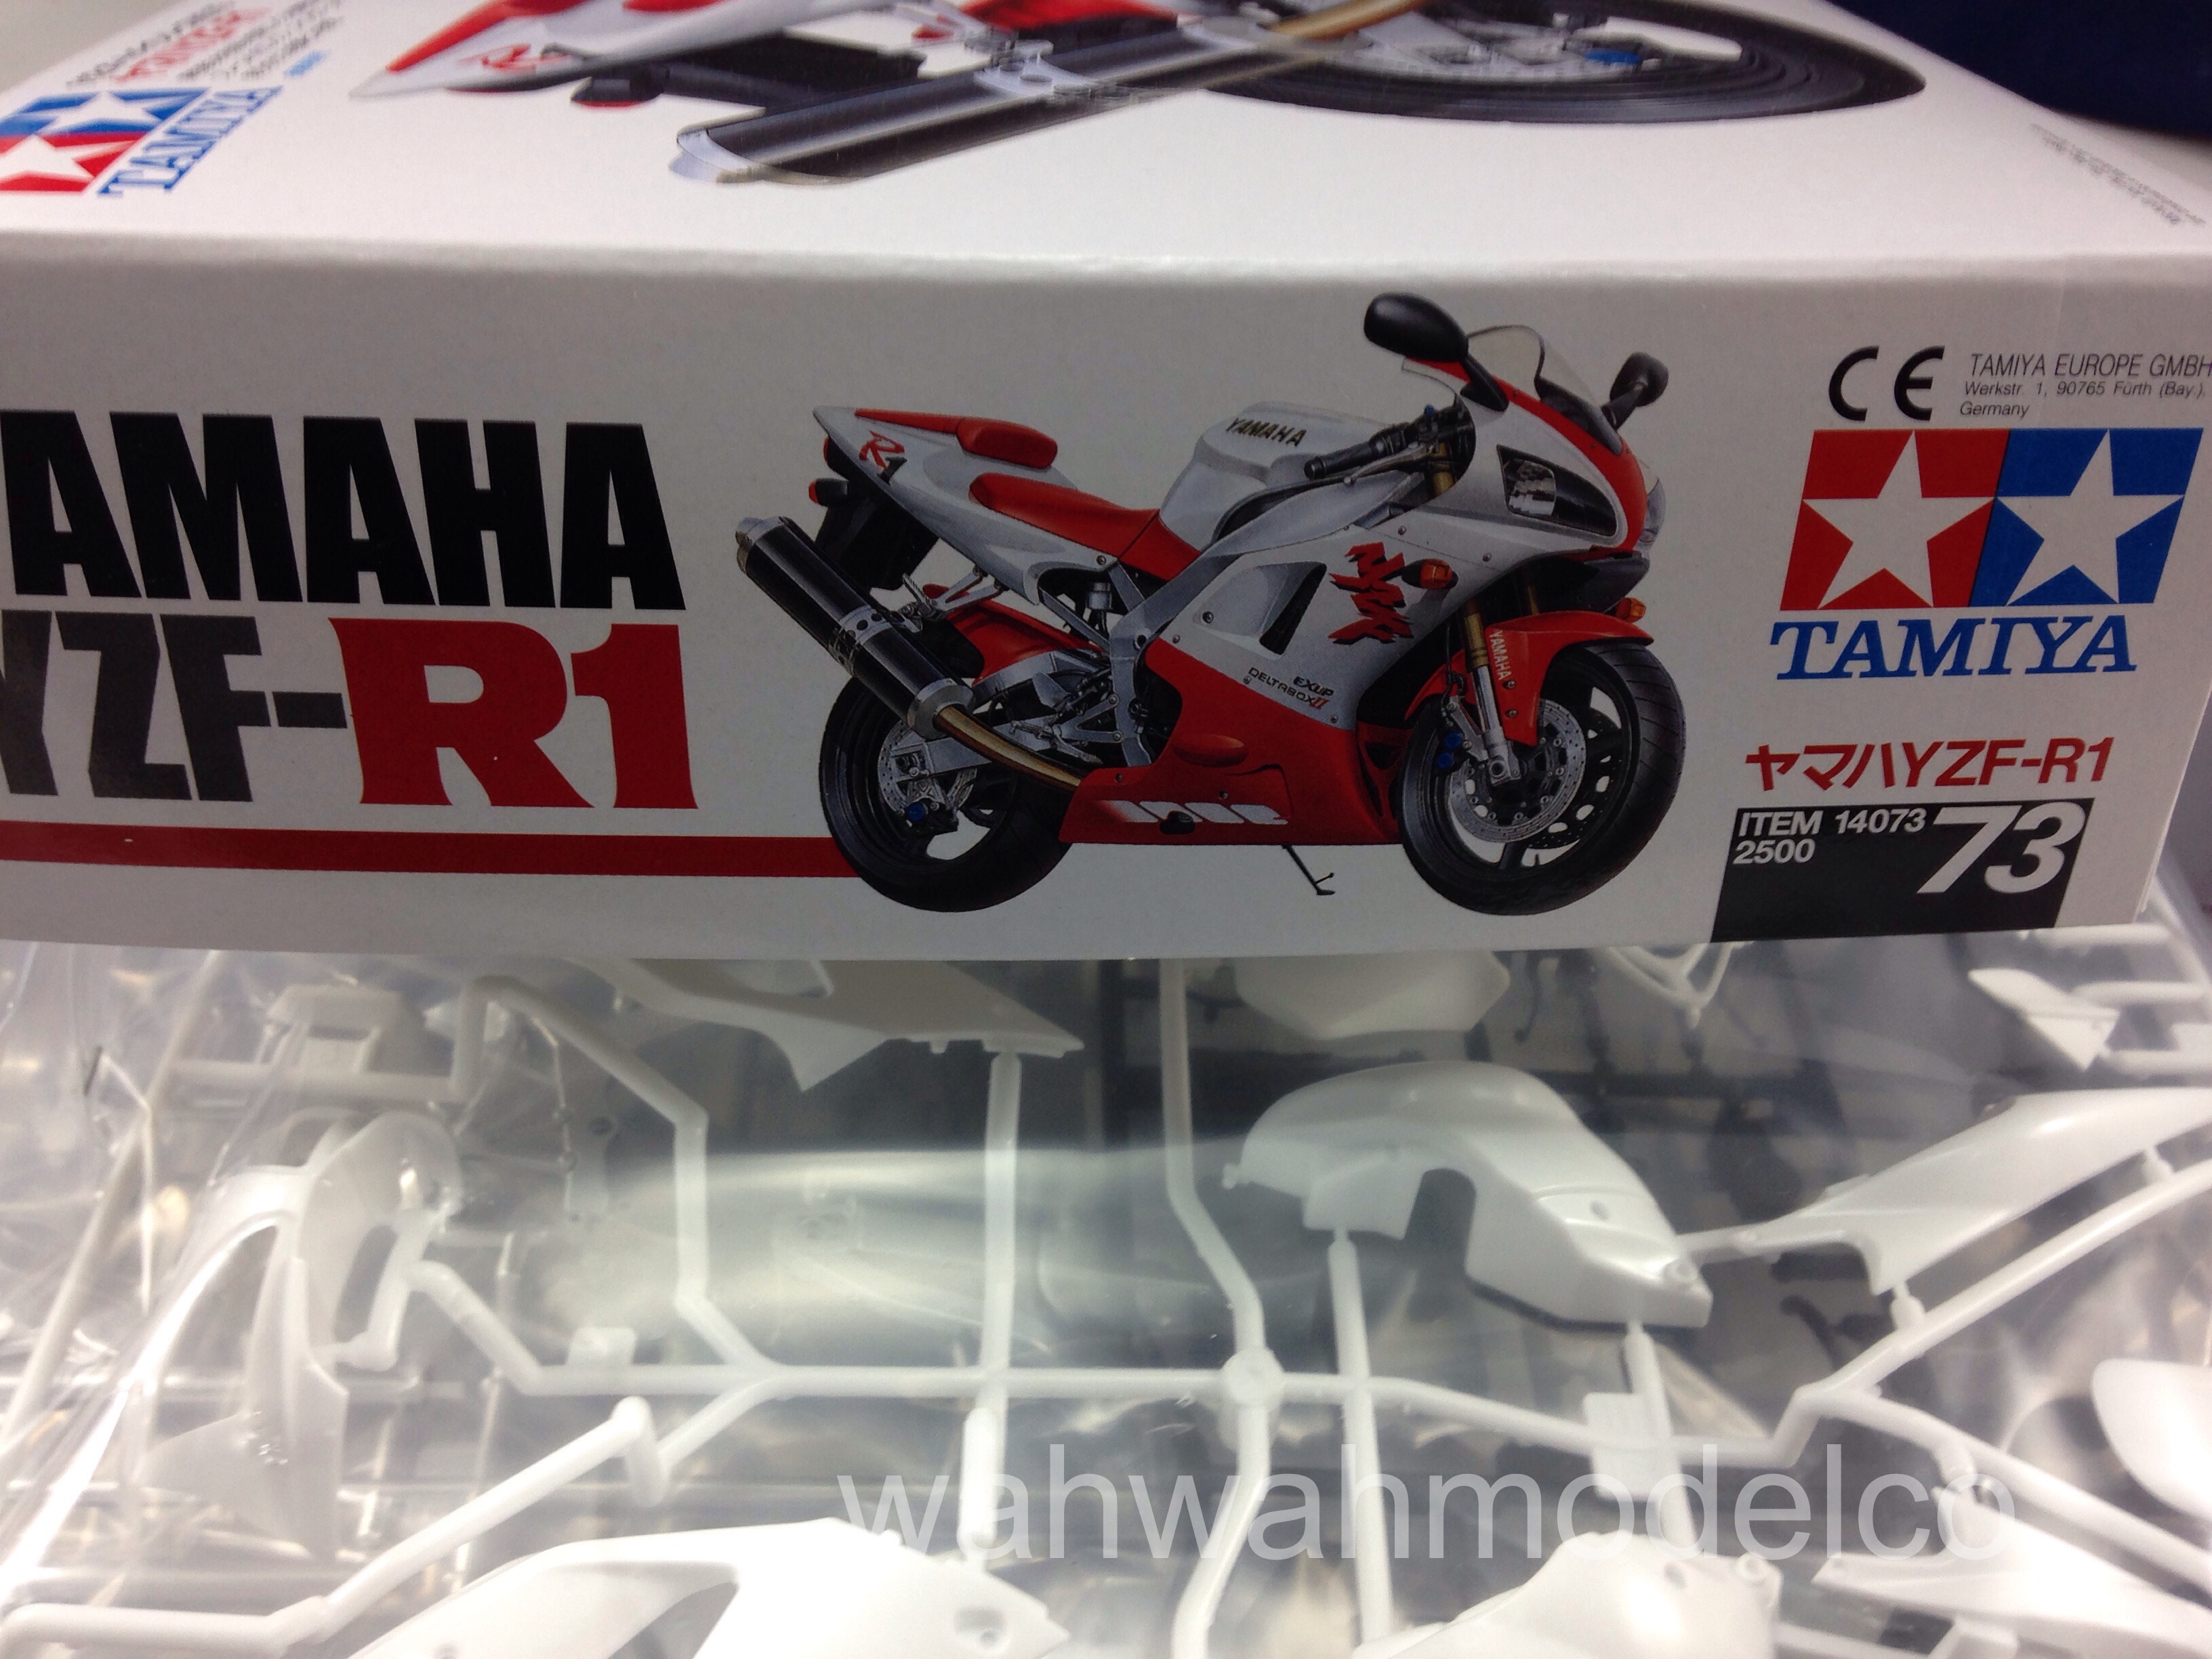 Tamiya 1/12 Yamaha Yzf-r1 Motorcycle Plastic Model Kit 14073 for sale online 